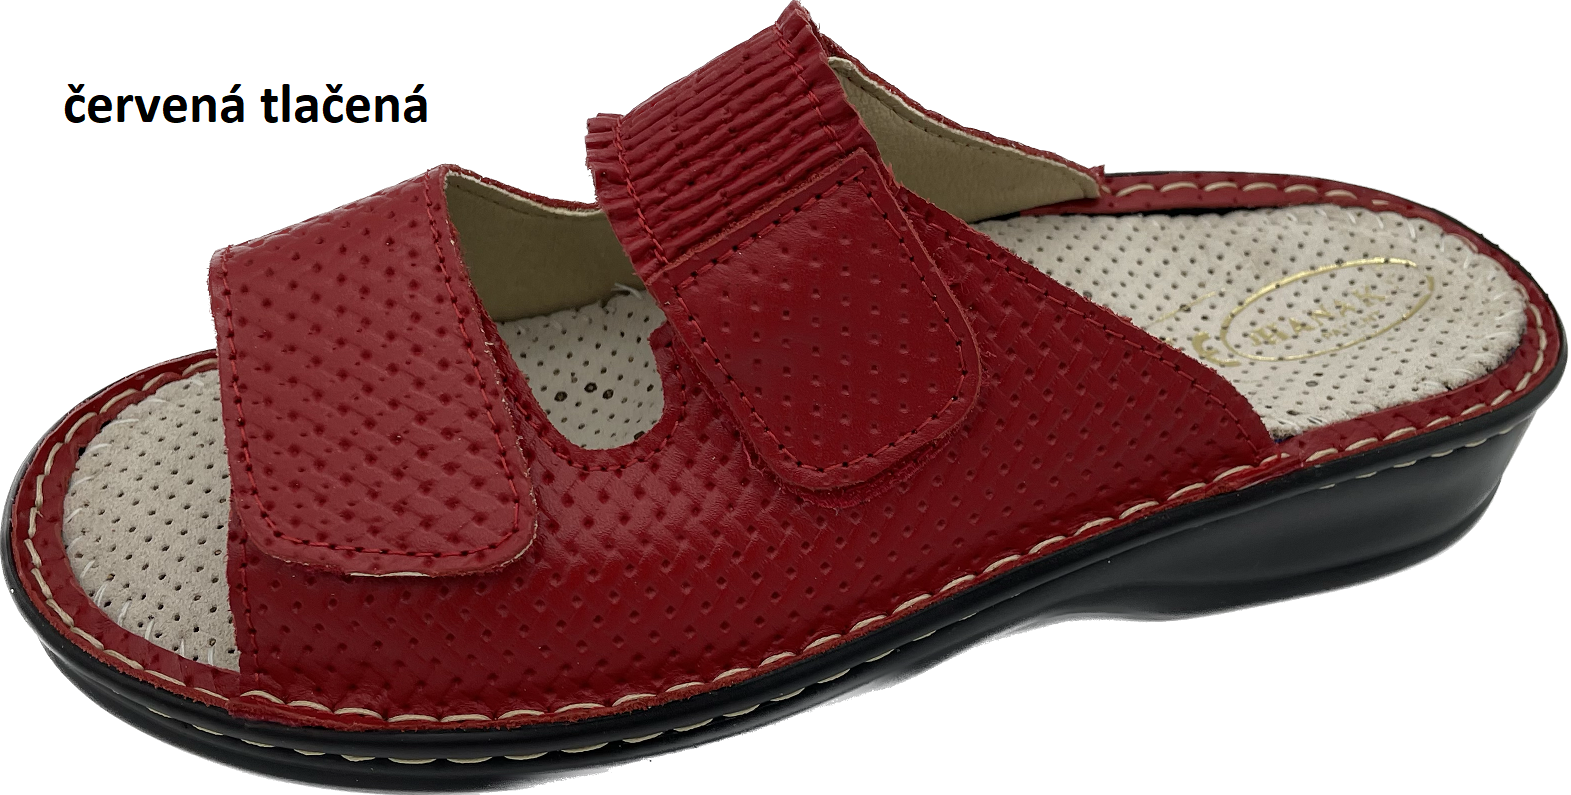 Boty Hanák vzor 304 - černá podešev Barva usně: červená tlačená, Velikosti obuvi: 39